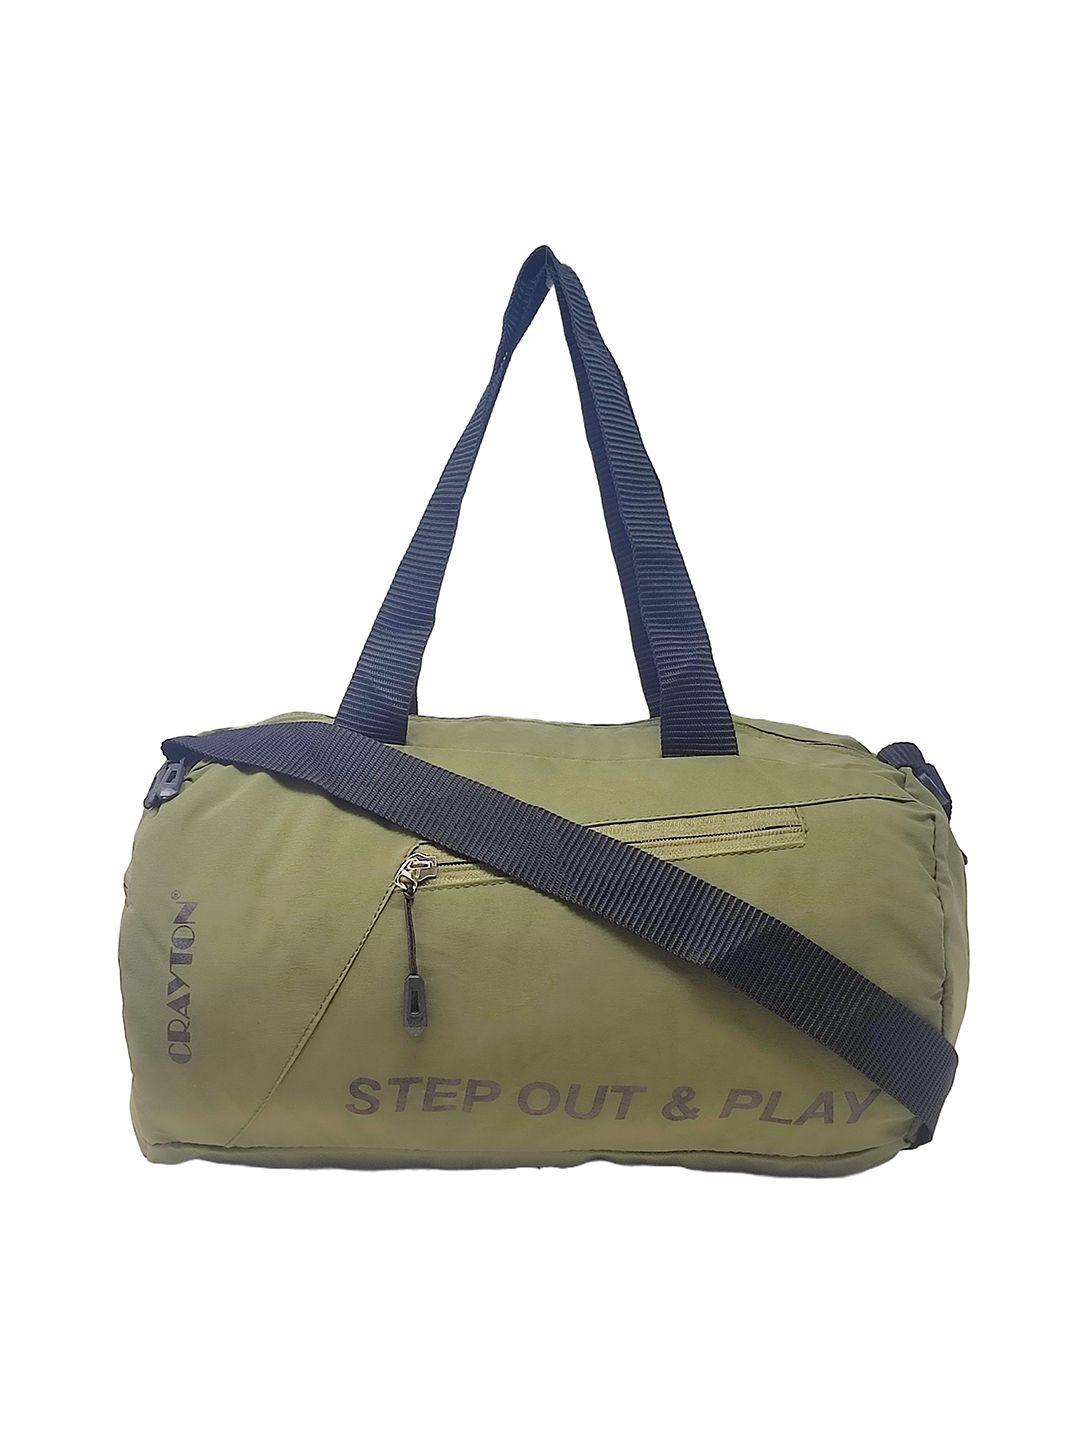 crayton printed collapsible and expandable duffel bag